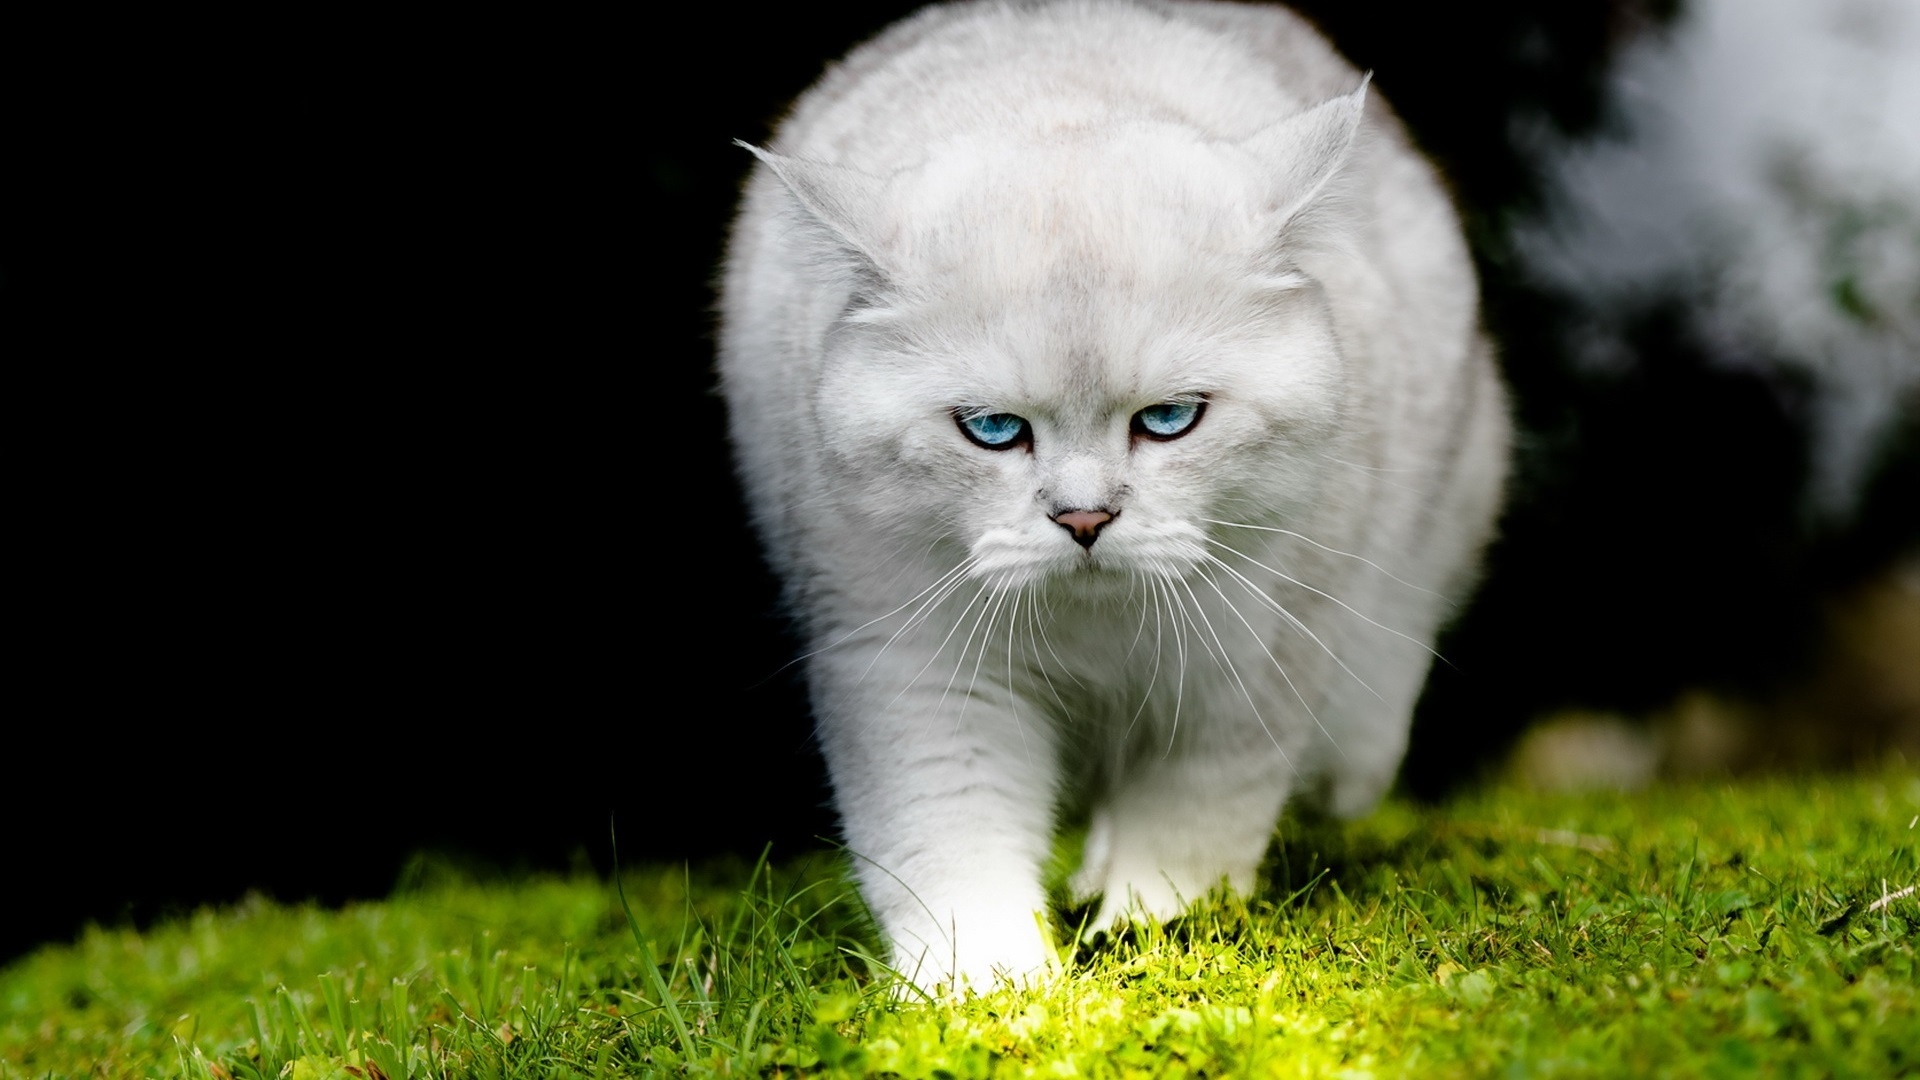 White Cat Image